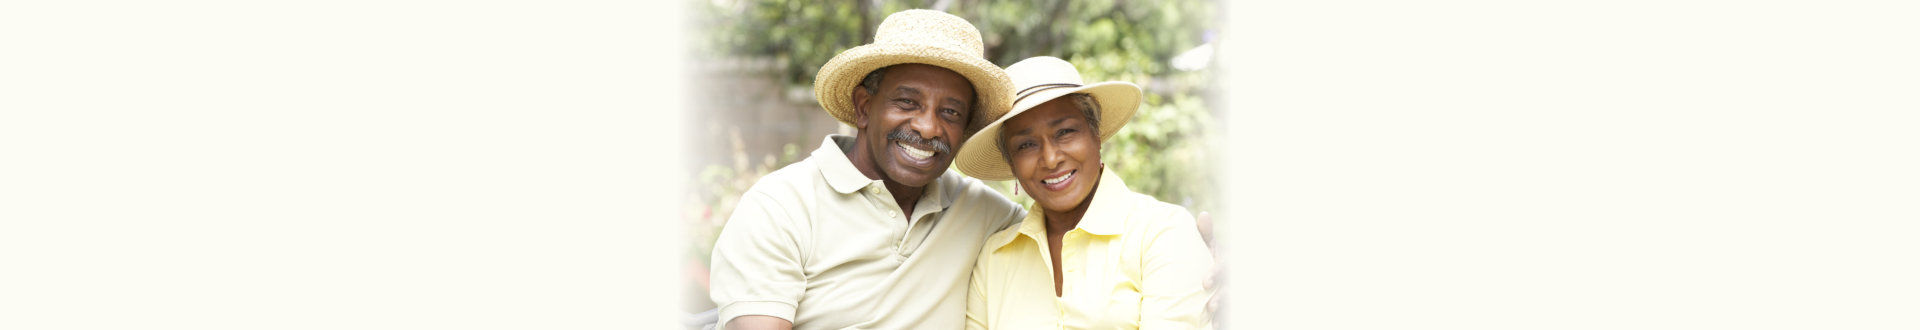 senior couple earing hat smiling